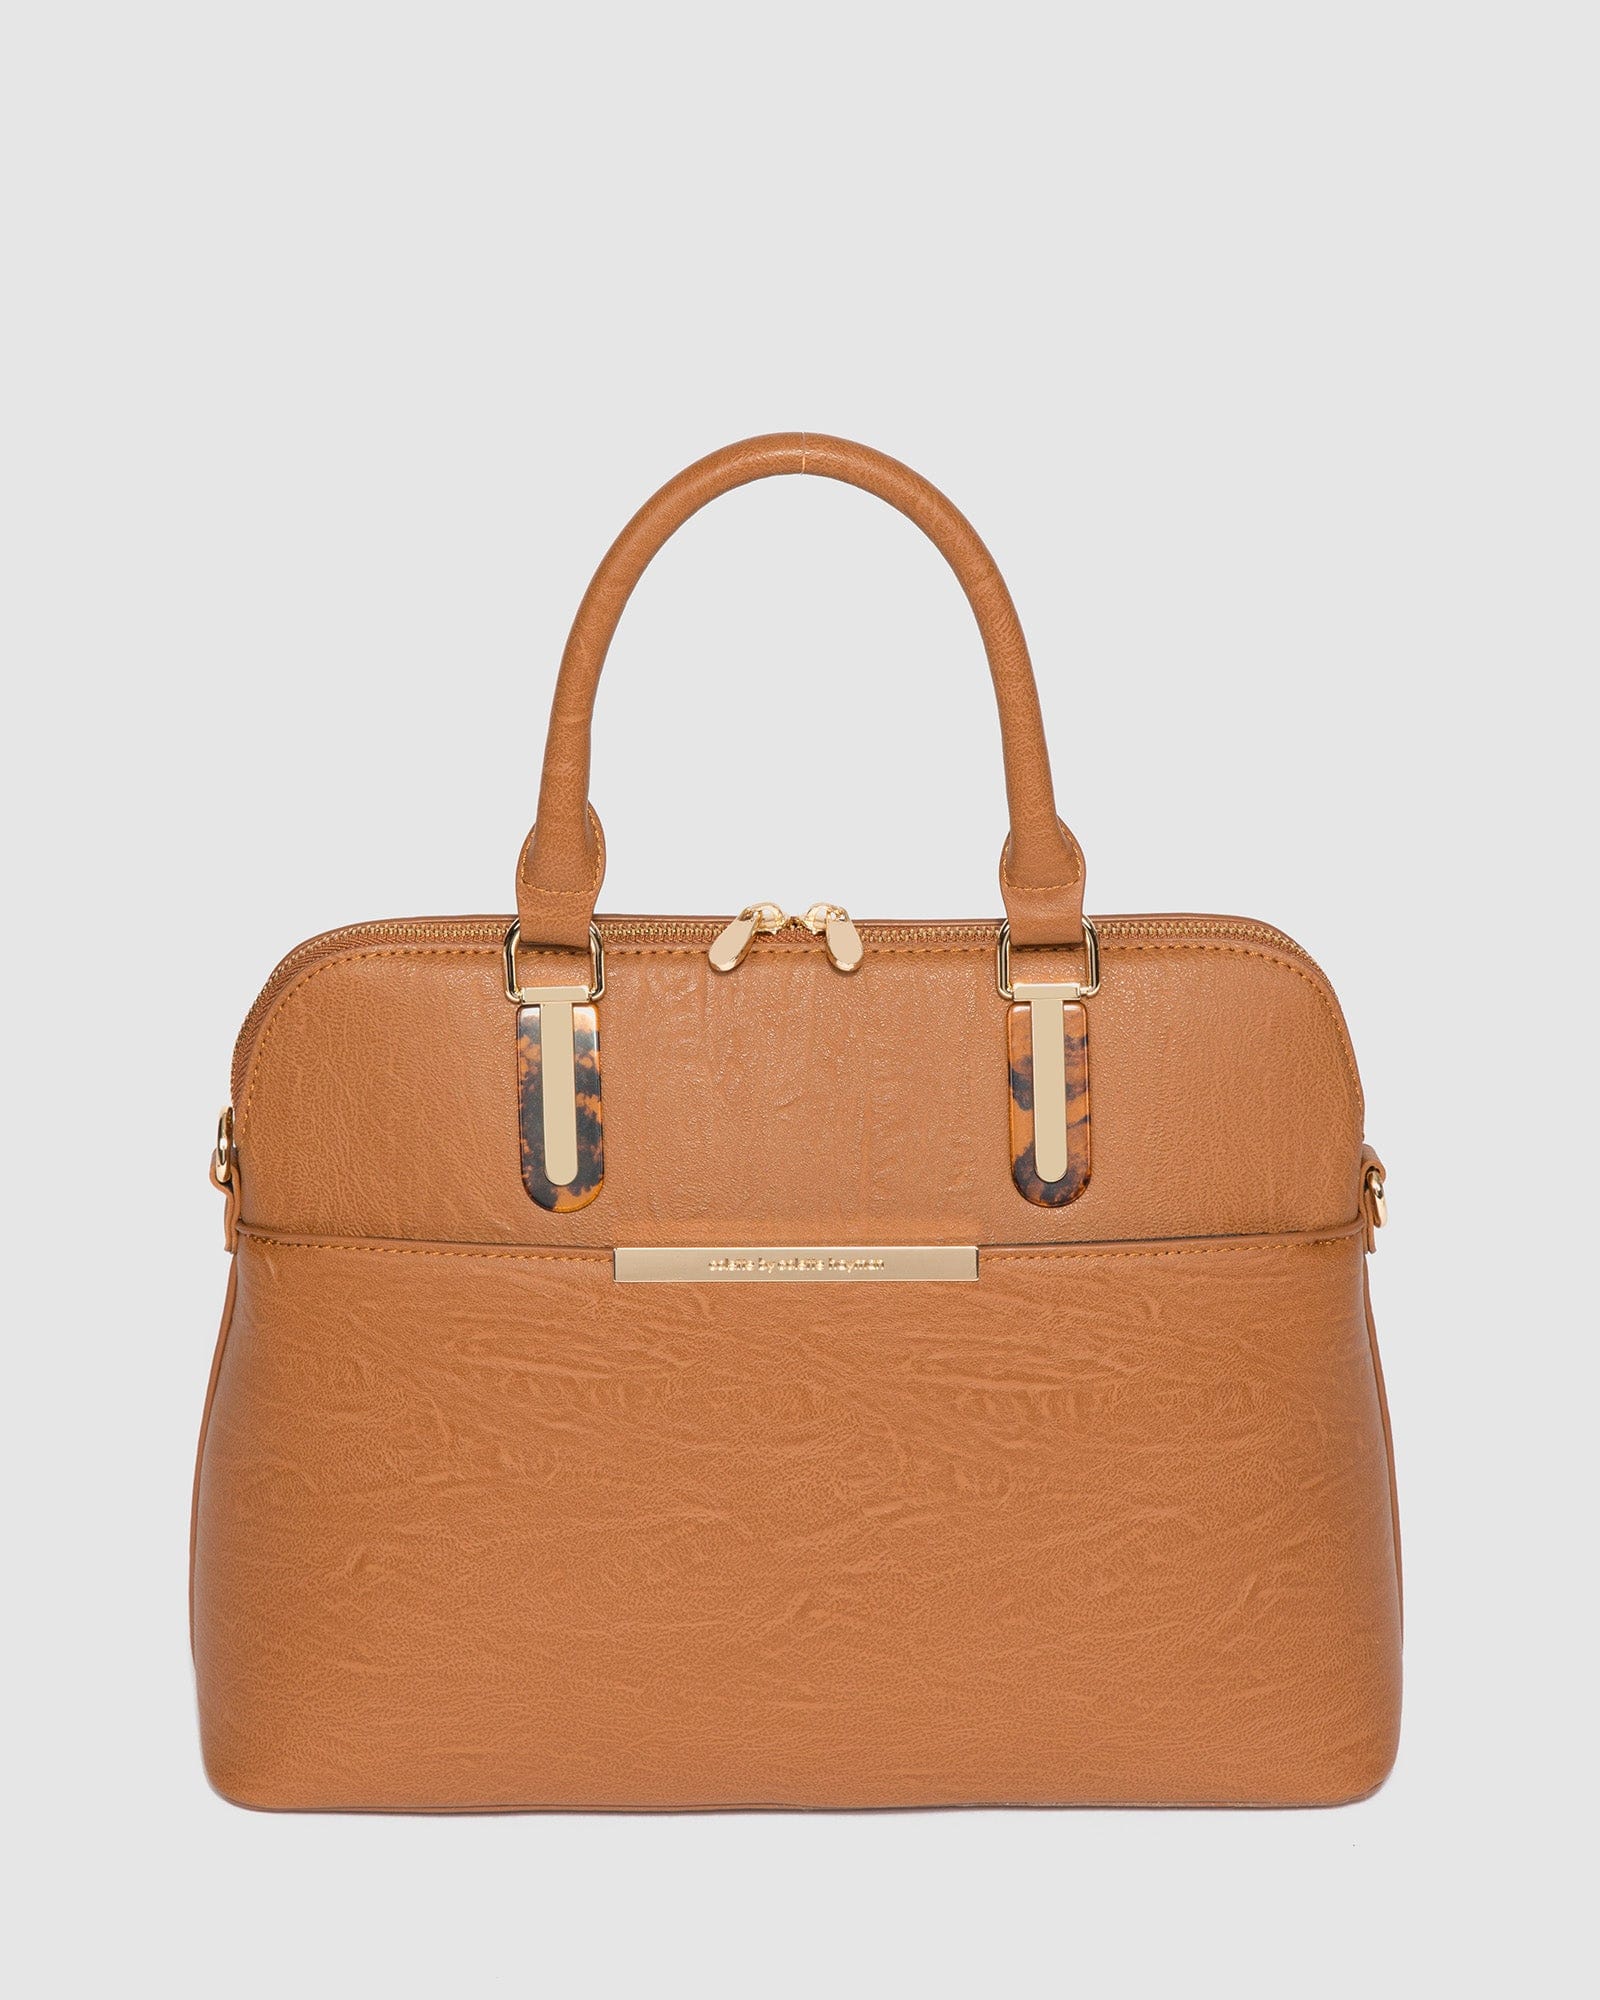 Colette Hayman Shoulder to Crossbody Bag in Rose Gold Faux Leather w  Tassels | eBay